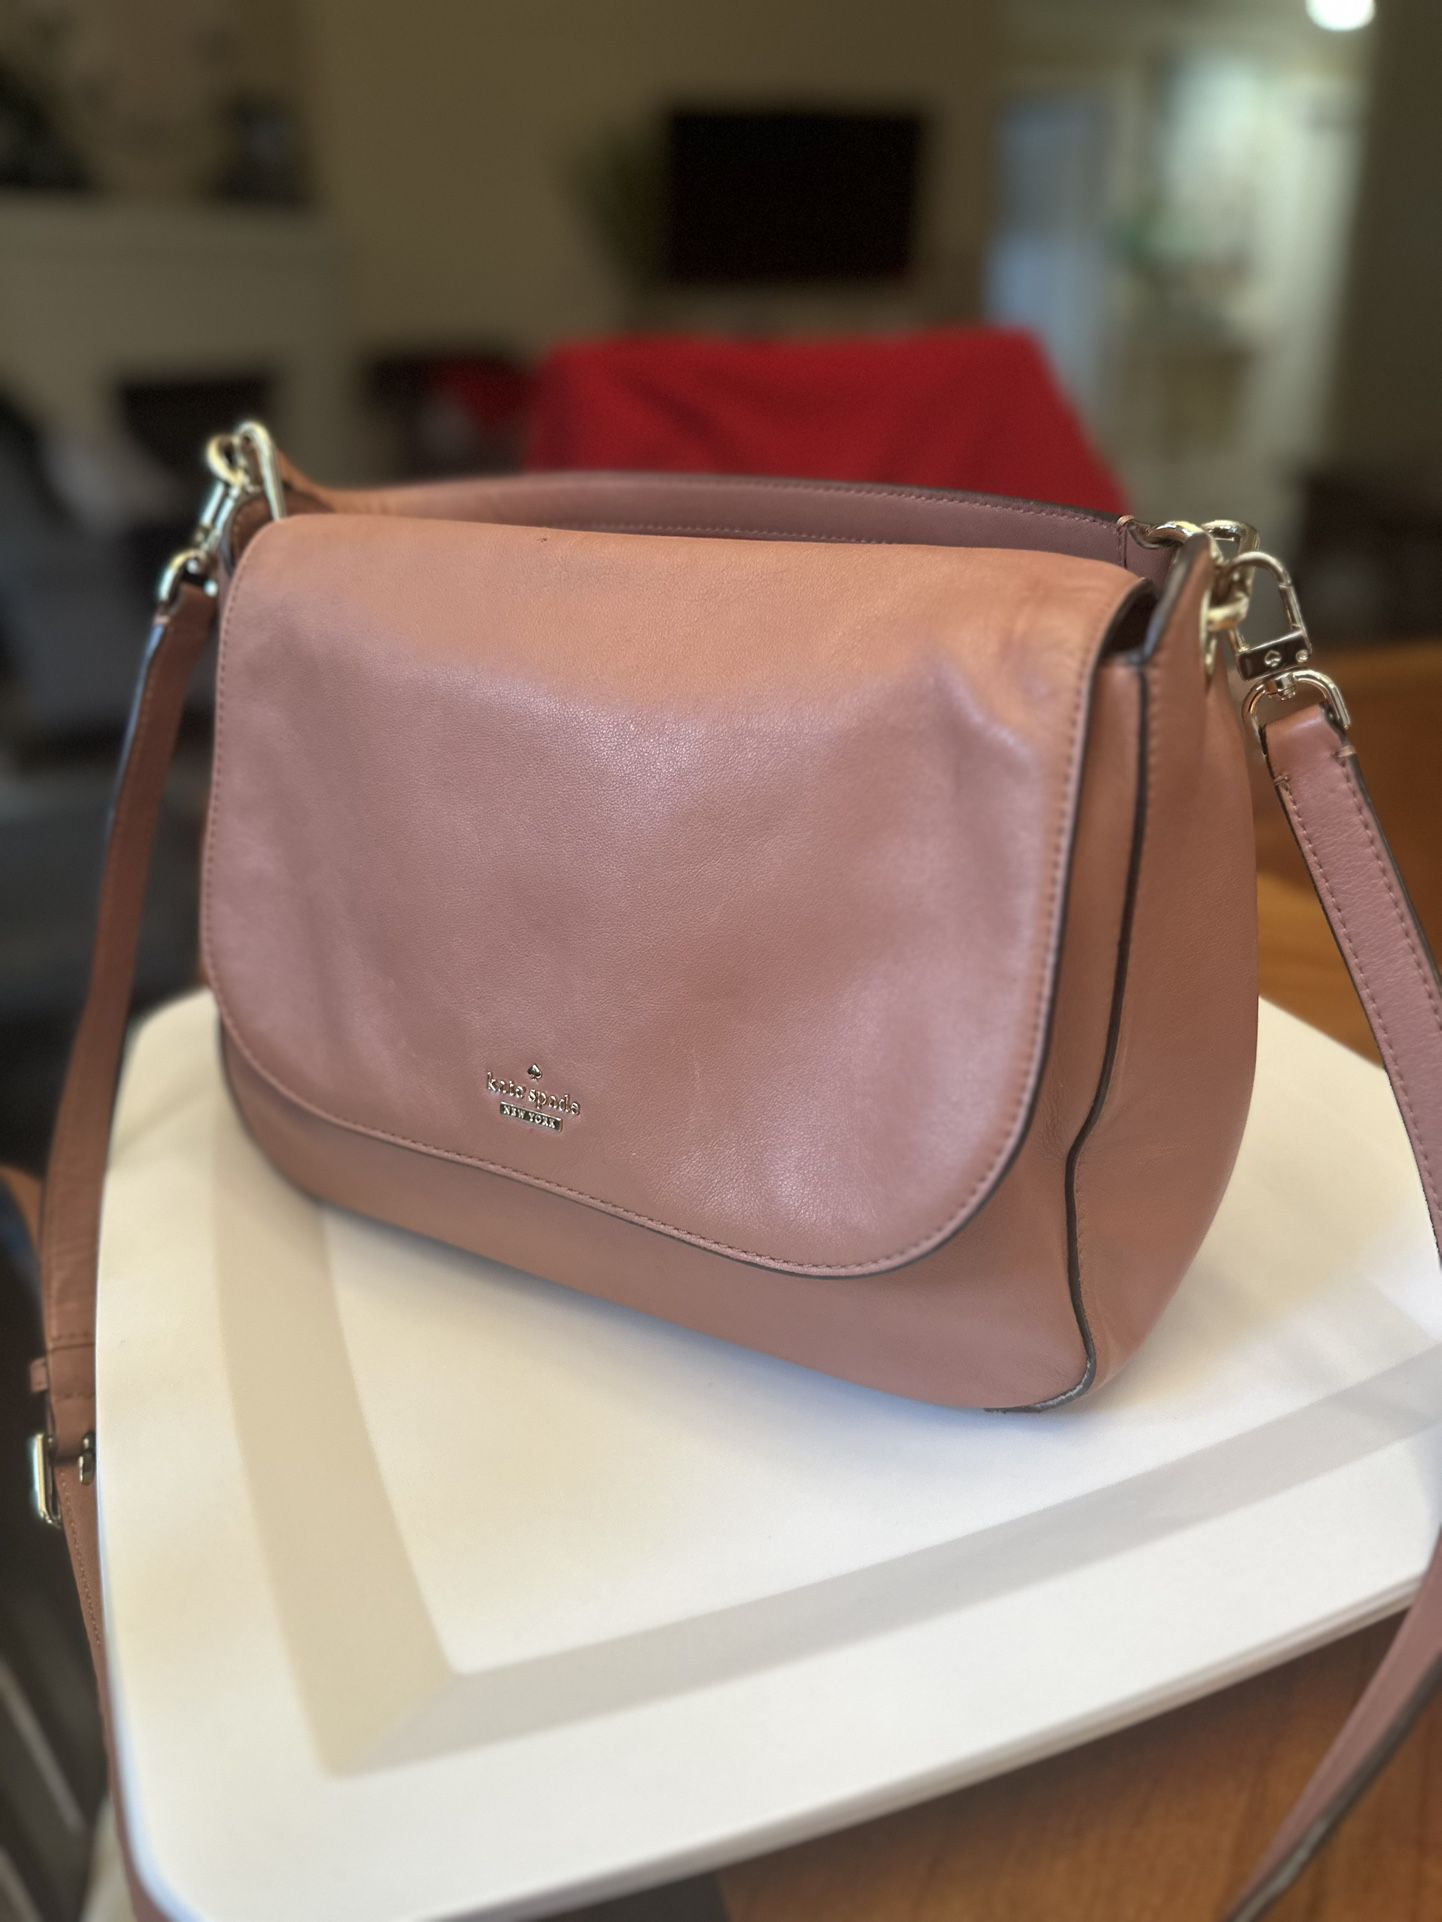 Kate Spade Leather Hand Bag $40